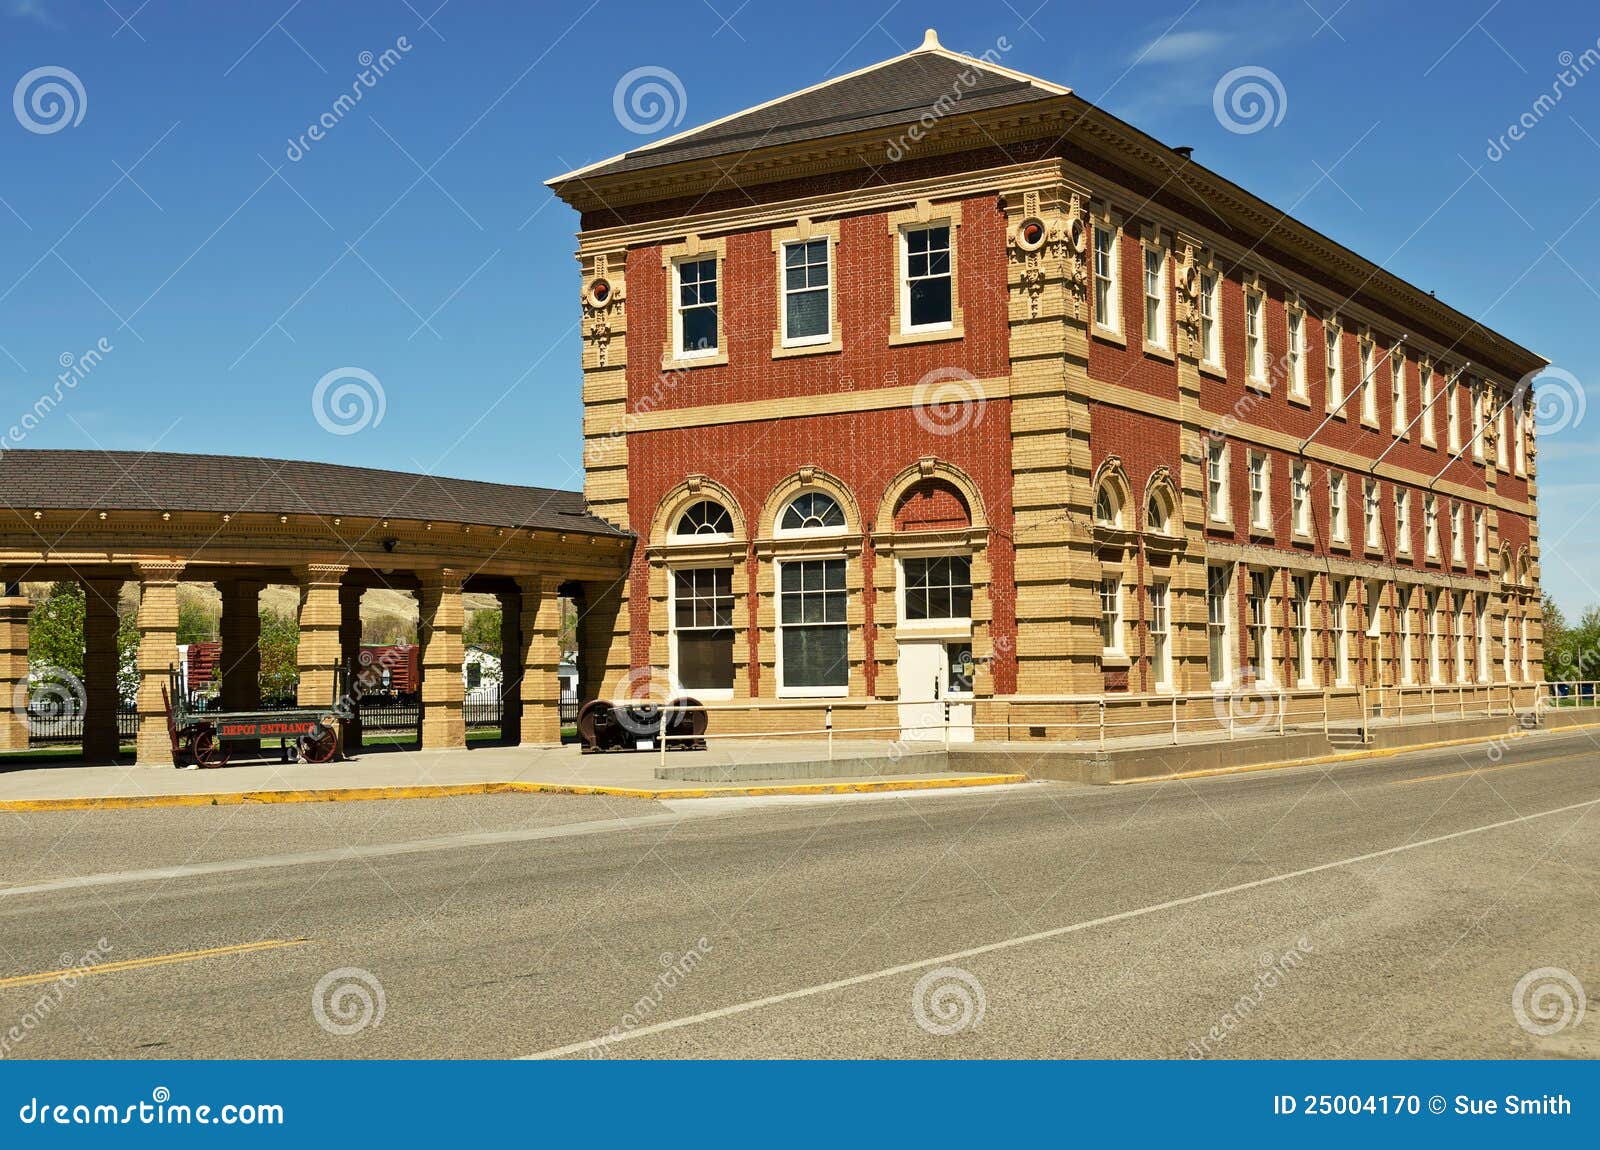 historic train depot